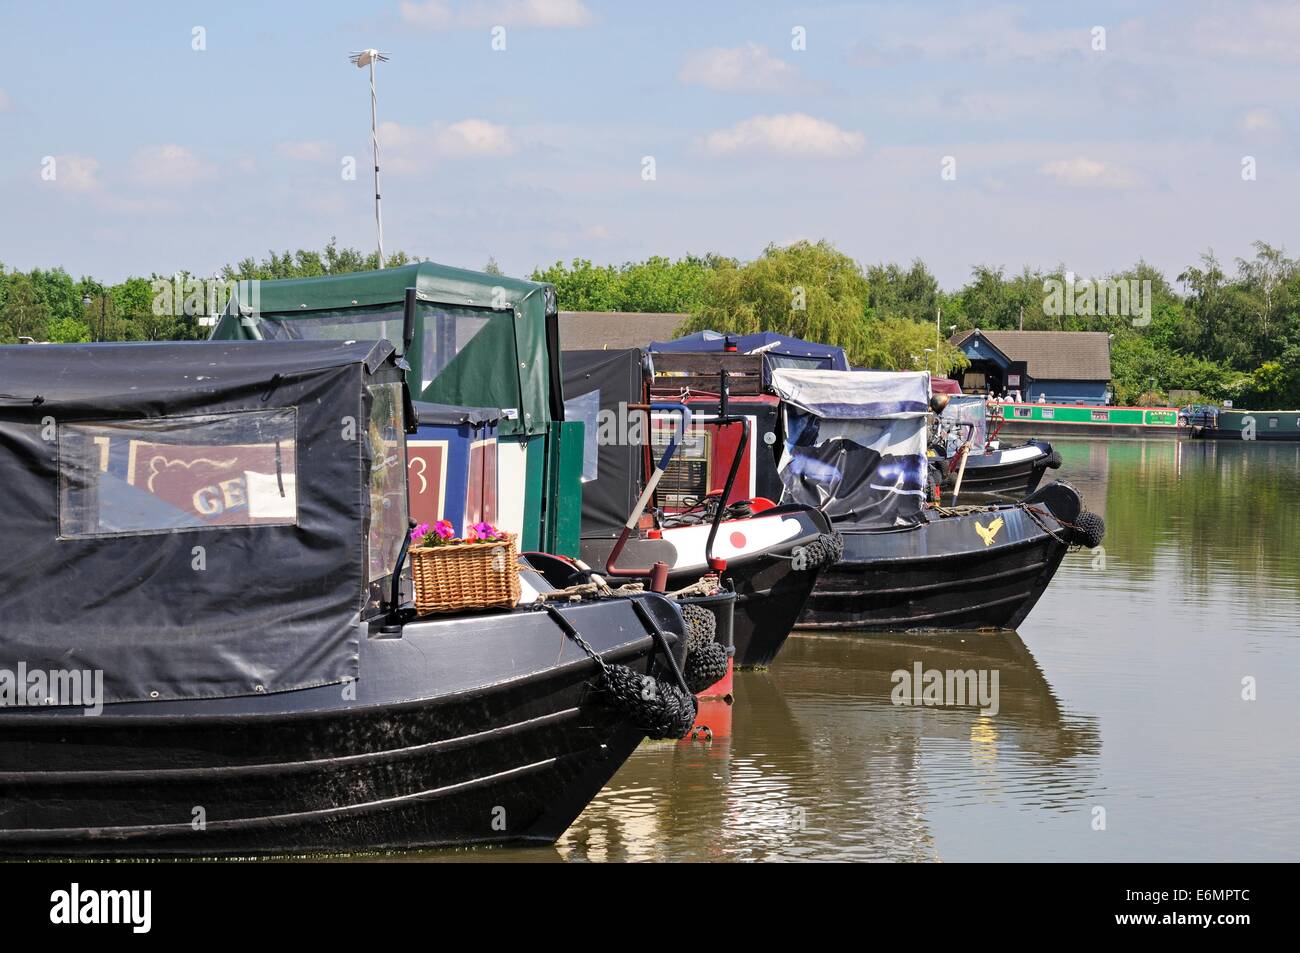 Narrowboats sur leurs amarres dans le bassin du canal, Barton Marina, Barton-under-Needwood, Staffordshire, Angleterre, Royaume-Uni, Europe. Banque D'Images